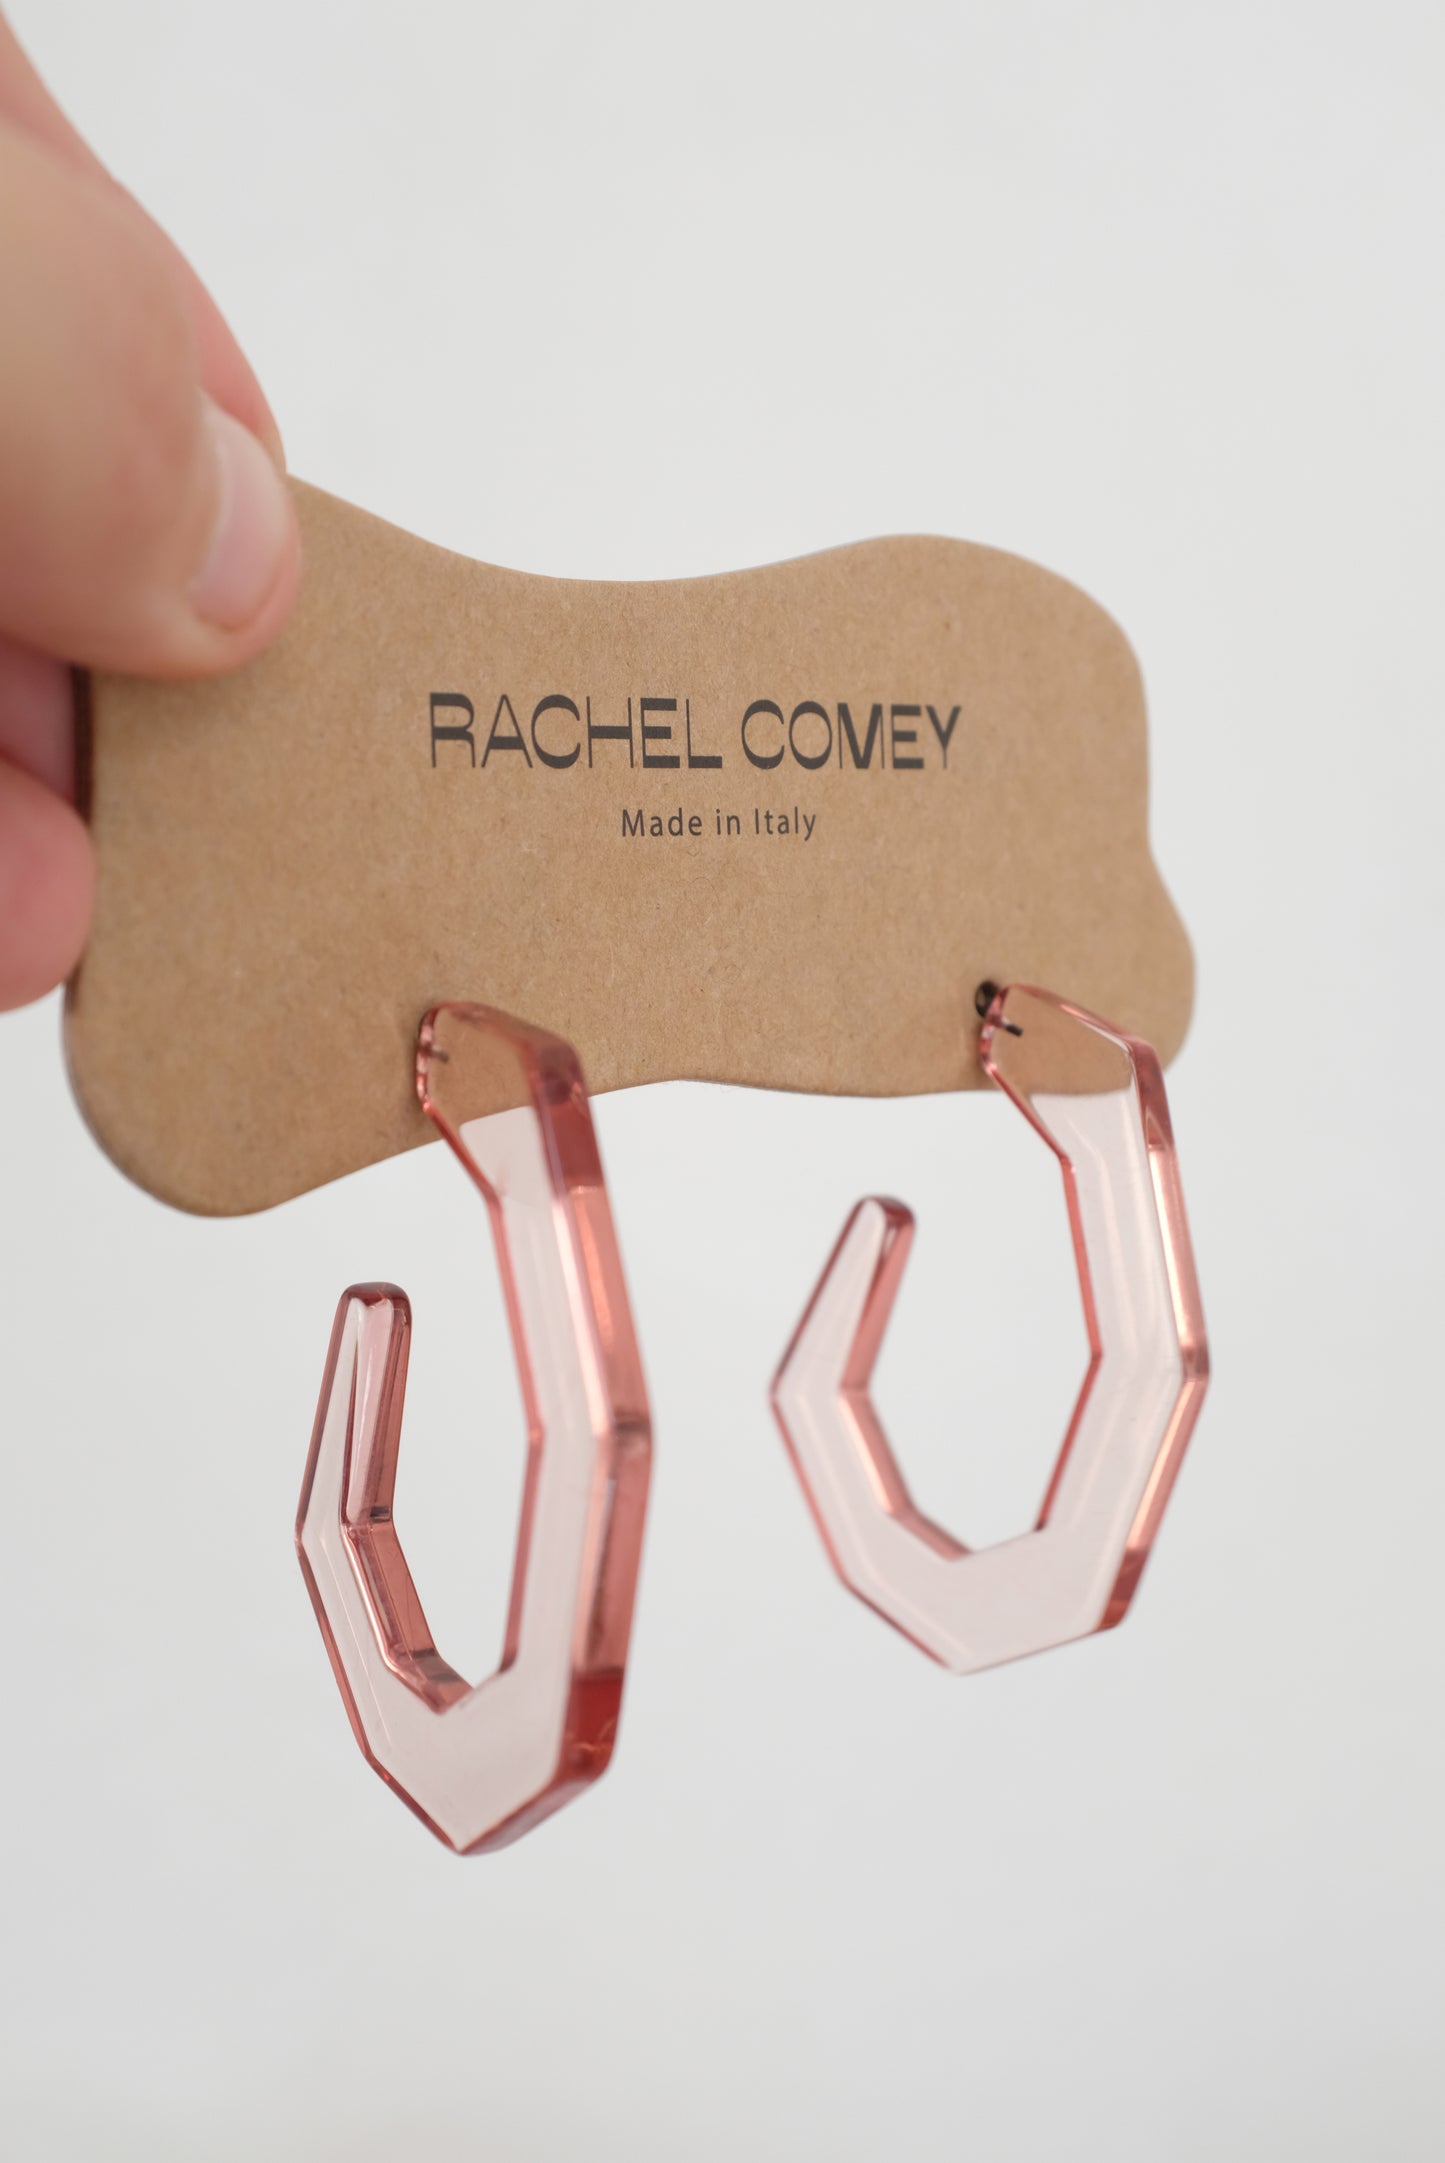 Rachel Comey Baby Factor Earrings